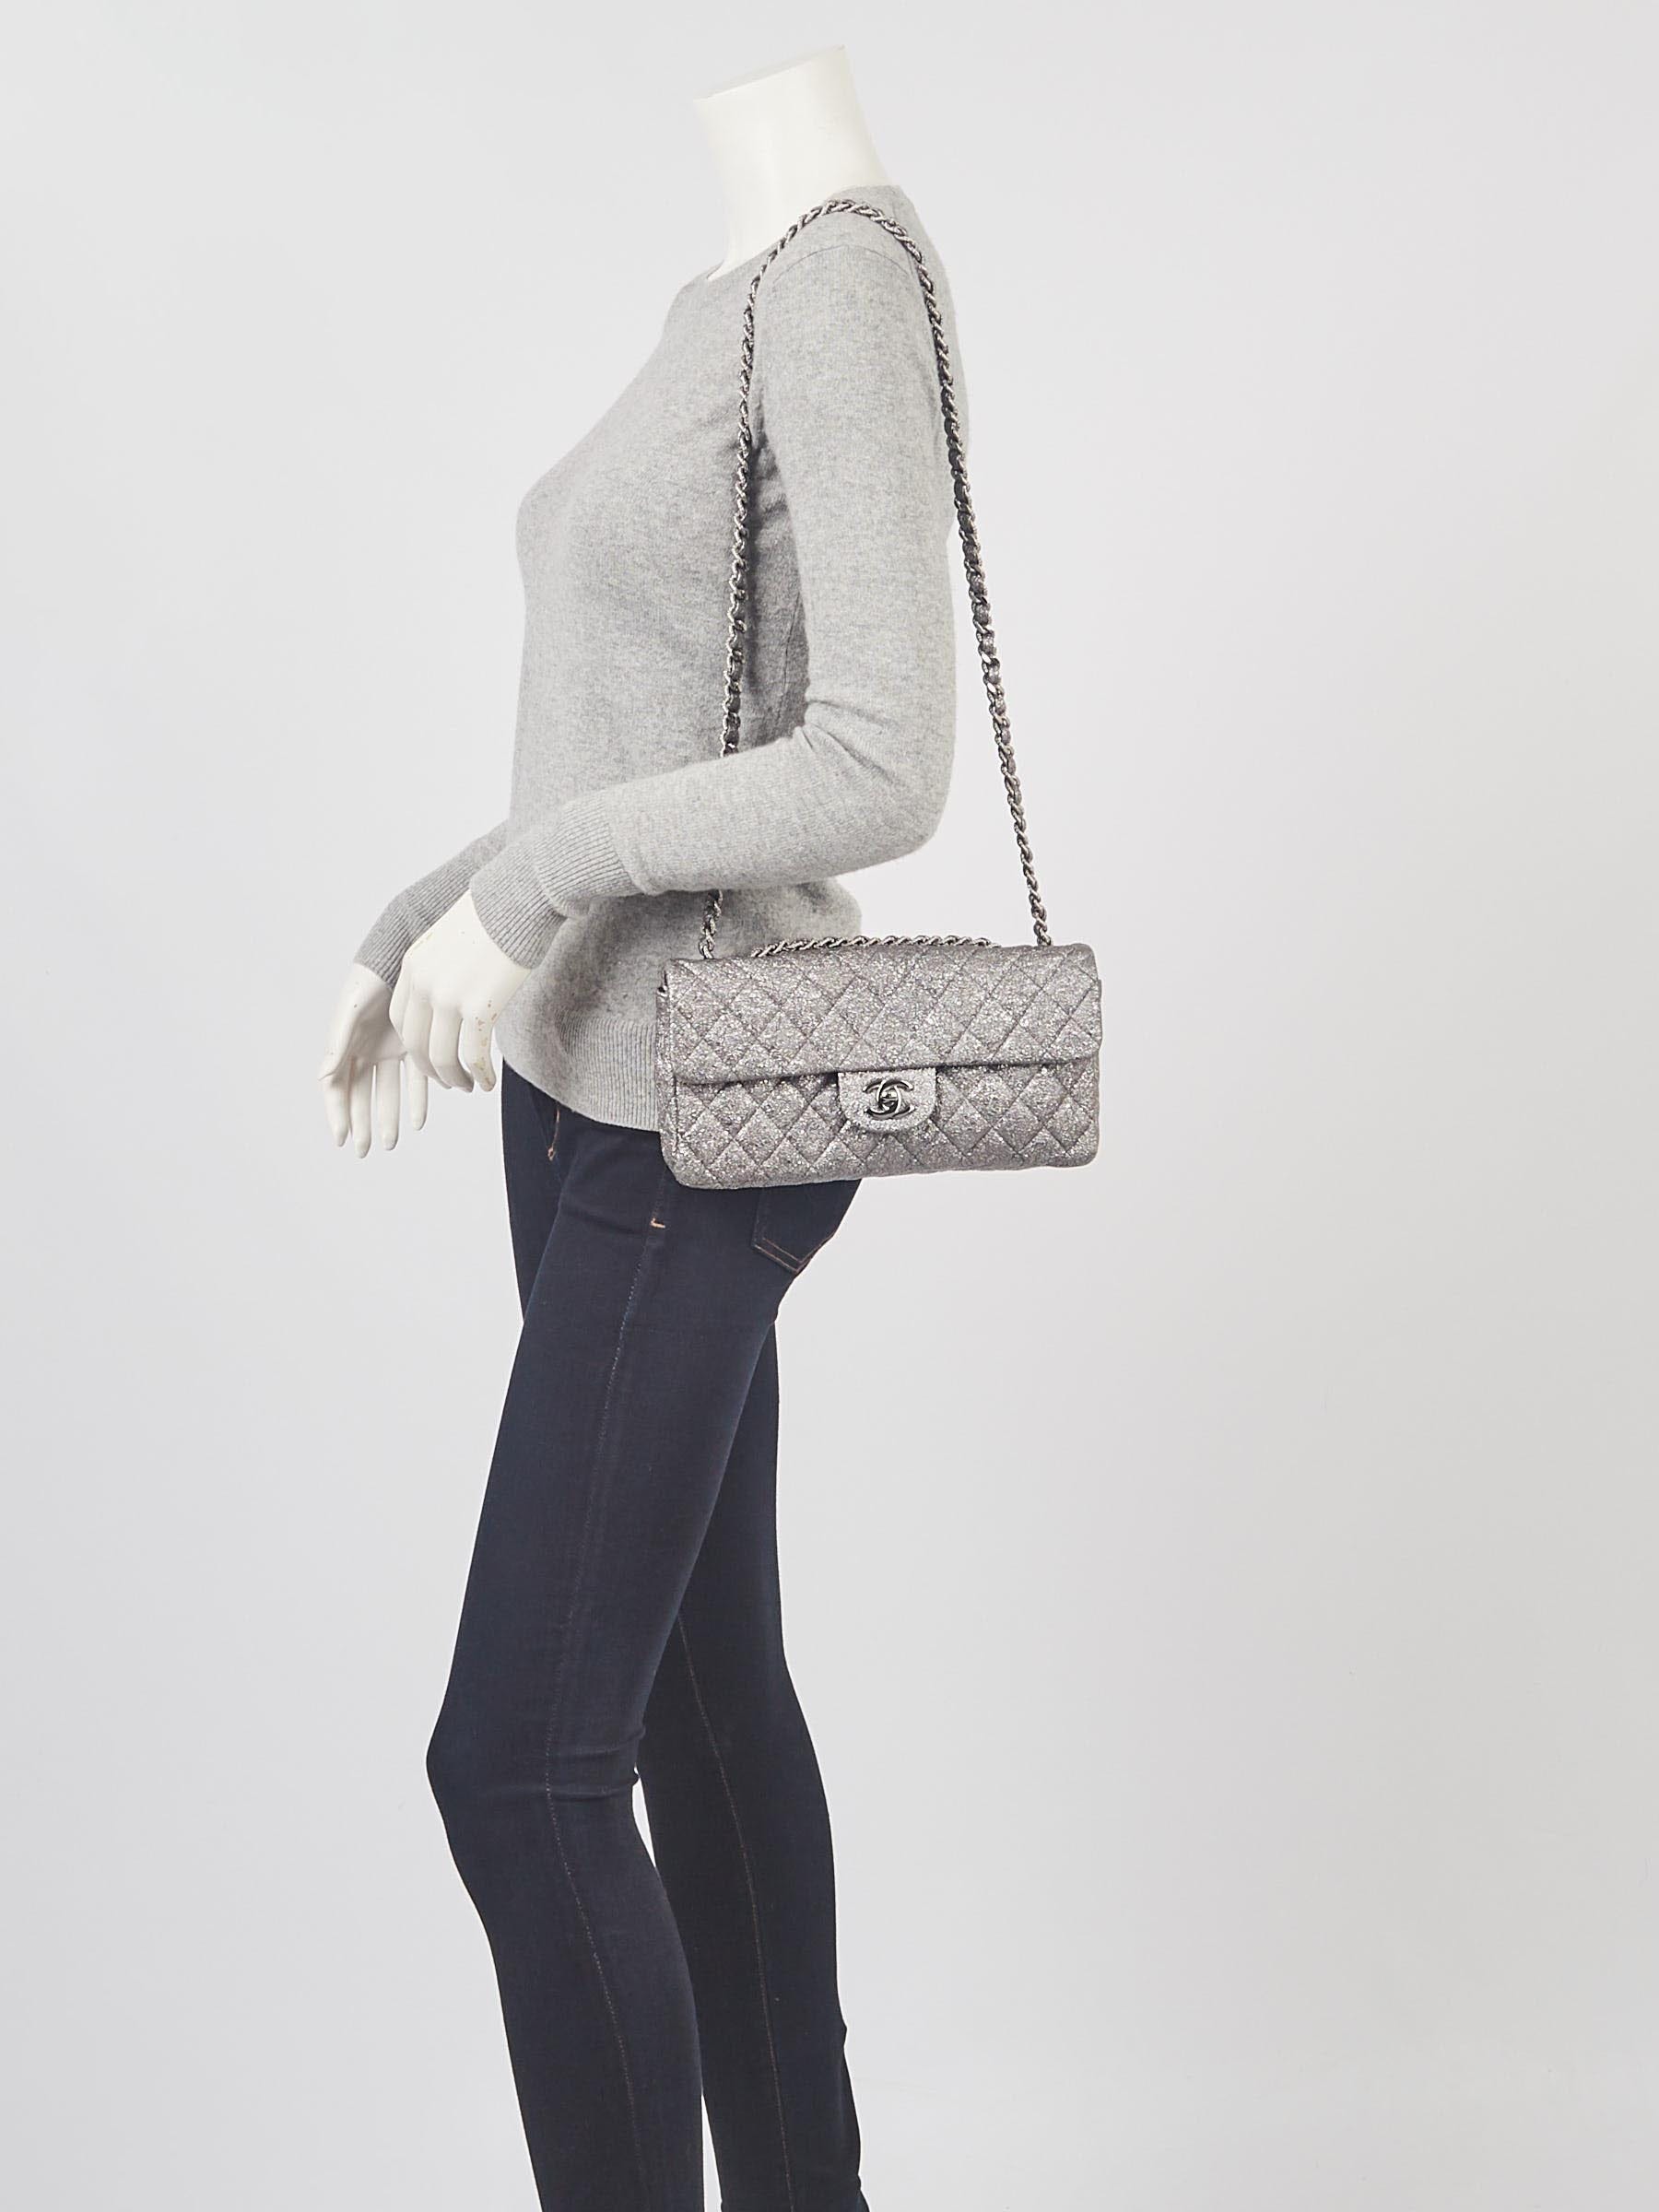 Chanel Classic Mini Flap Handbag